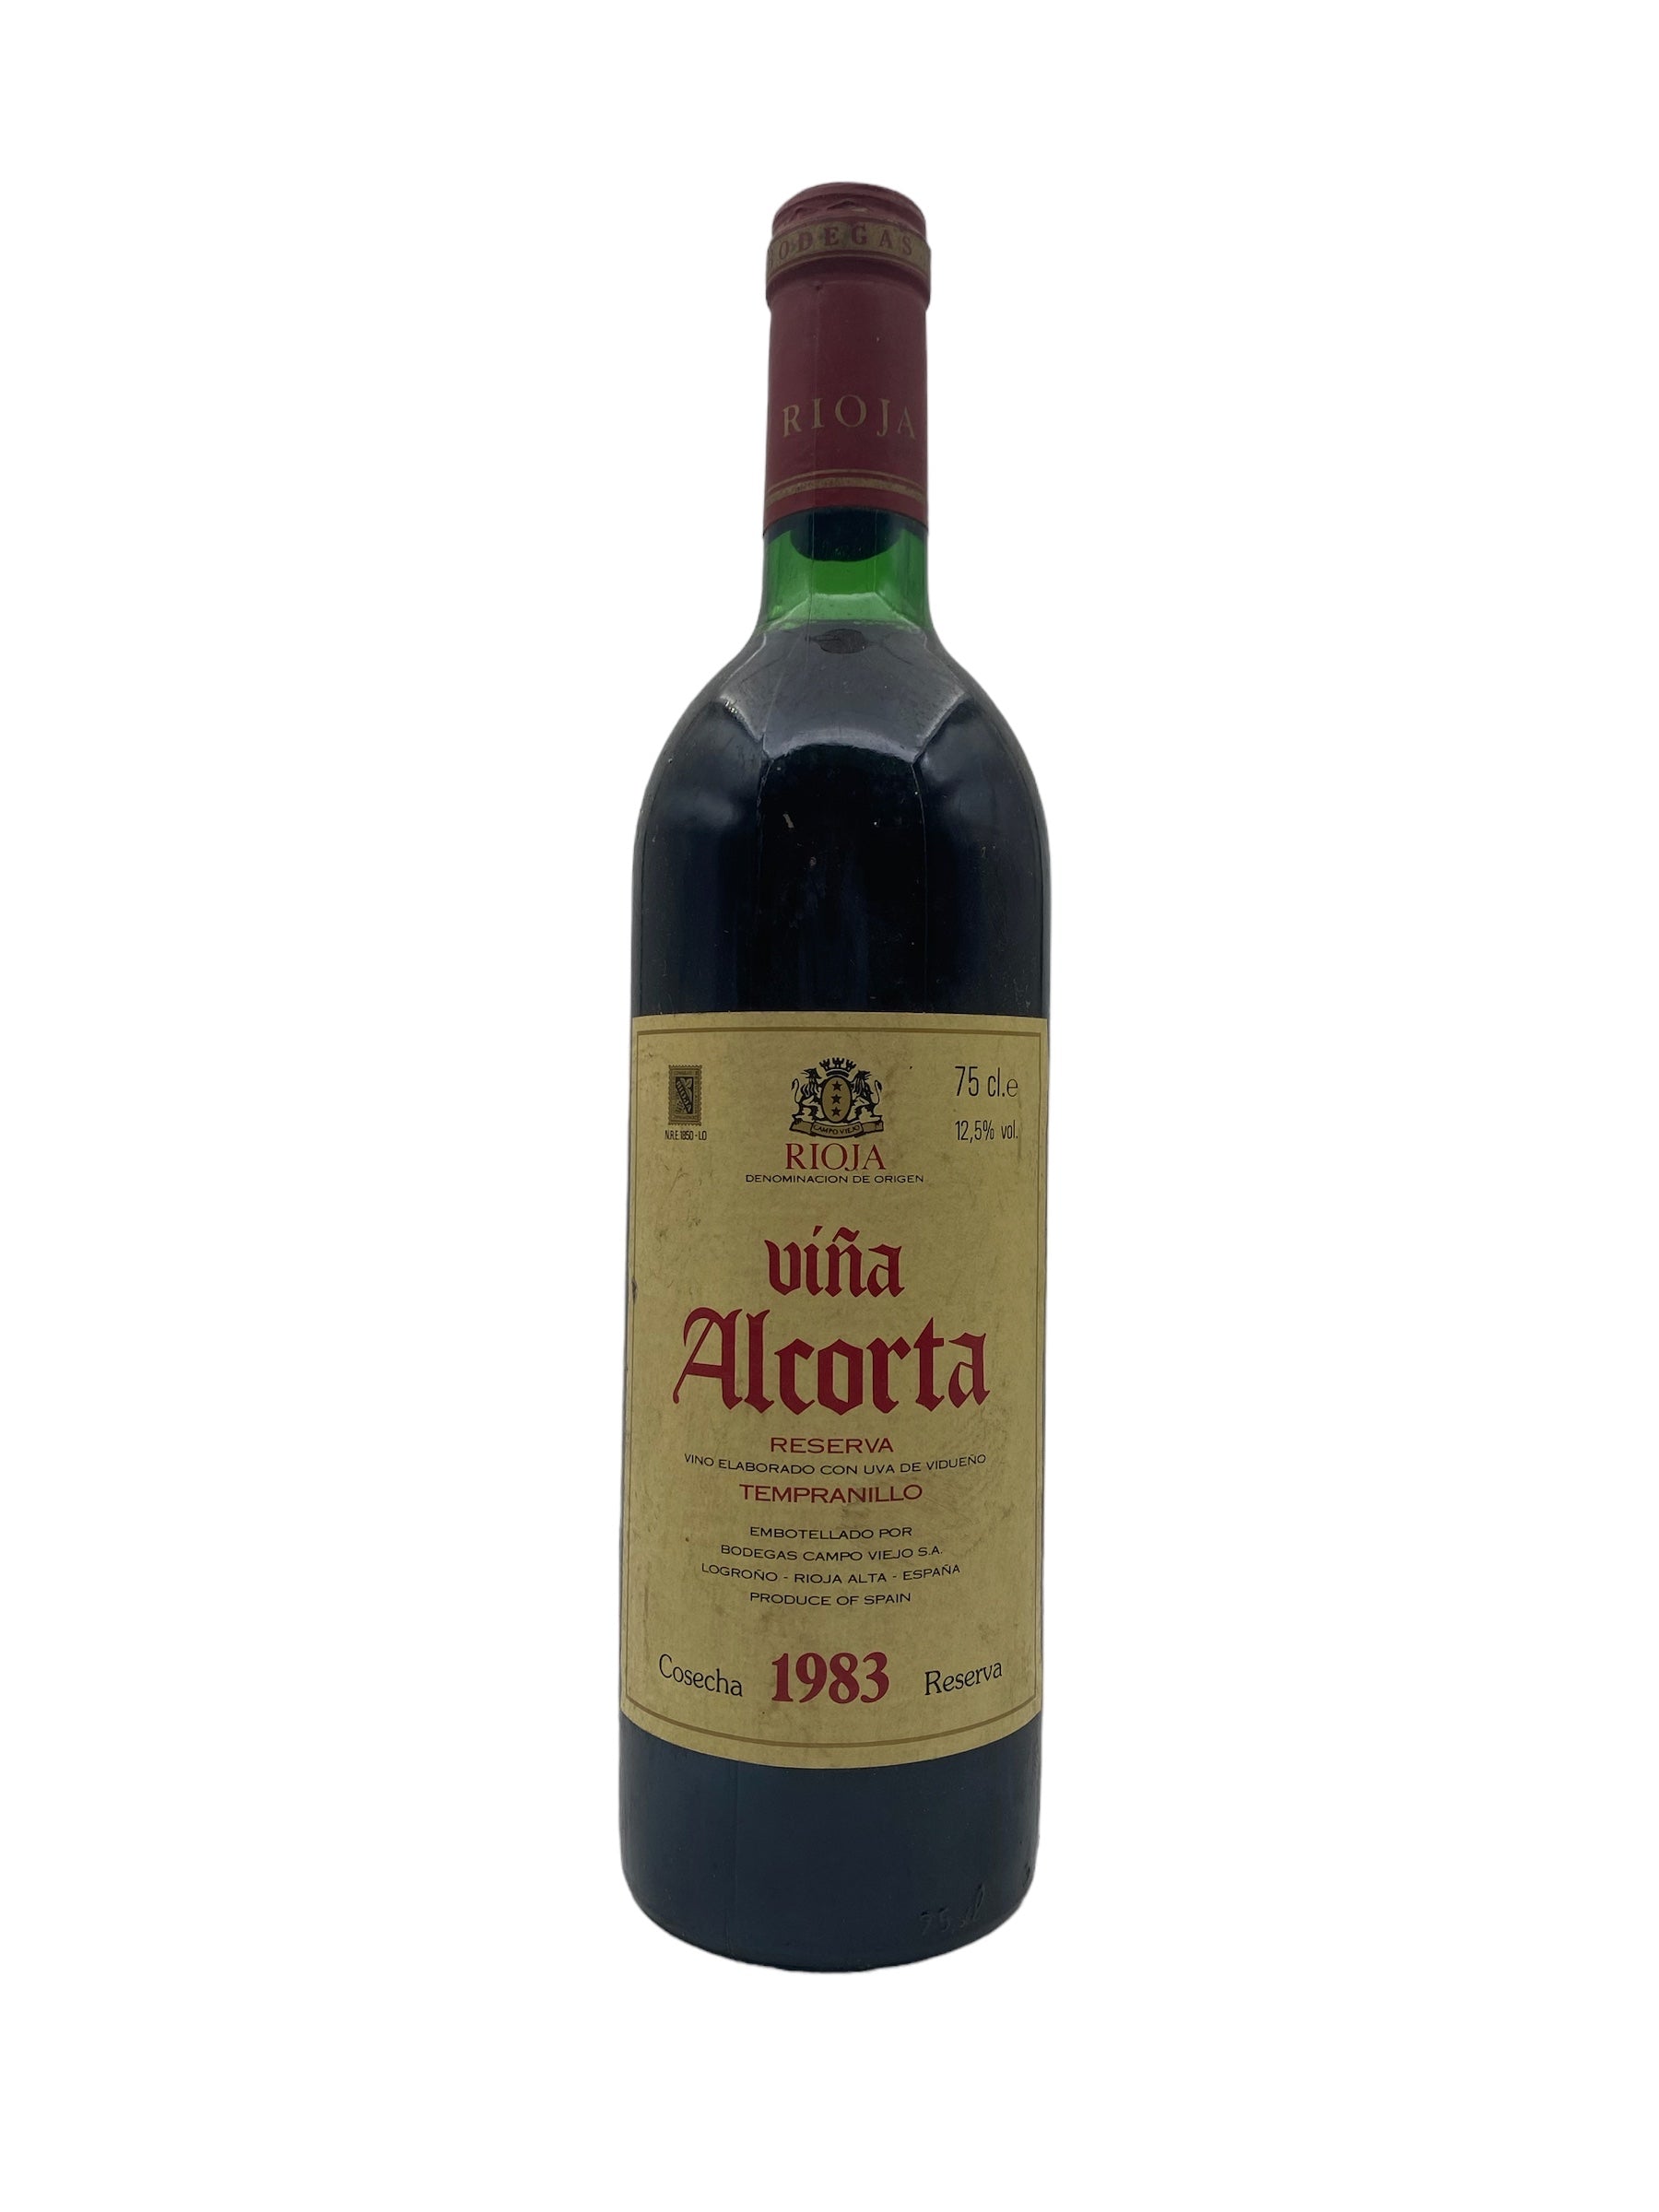 Billede af Rioja Viña Alcorta 1983 Reserva